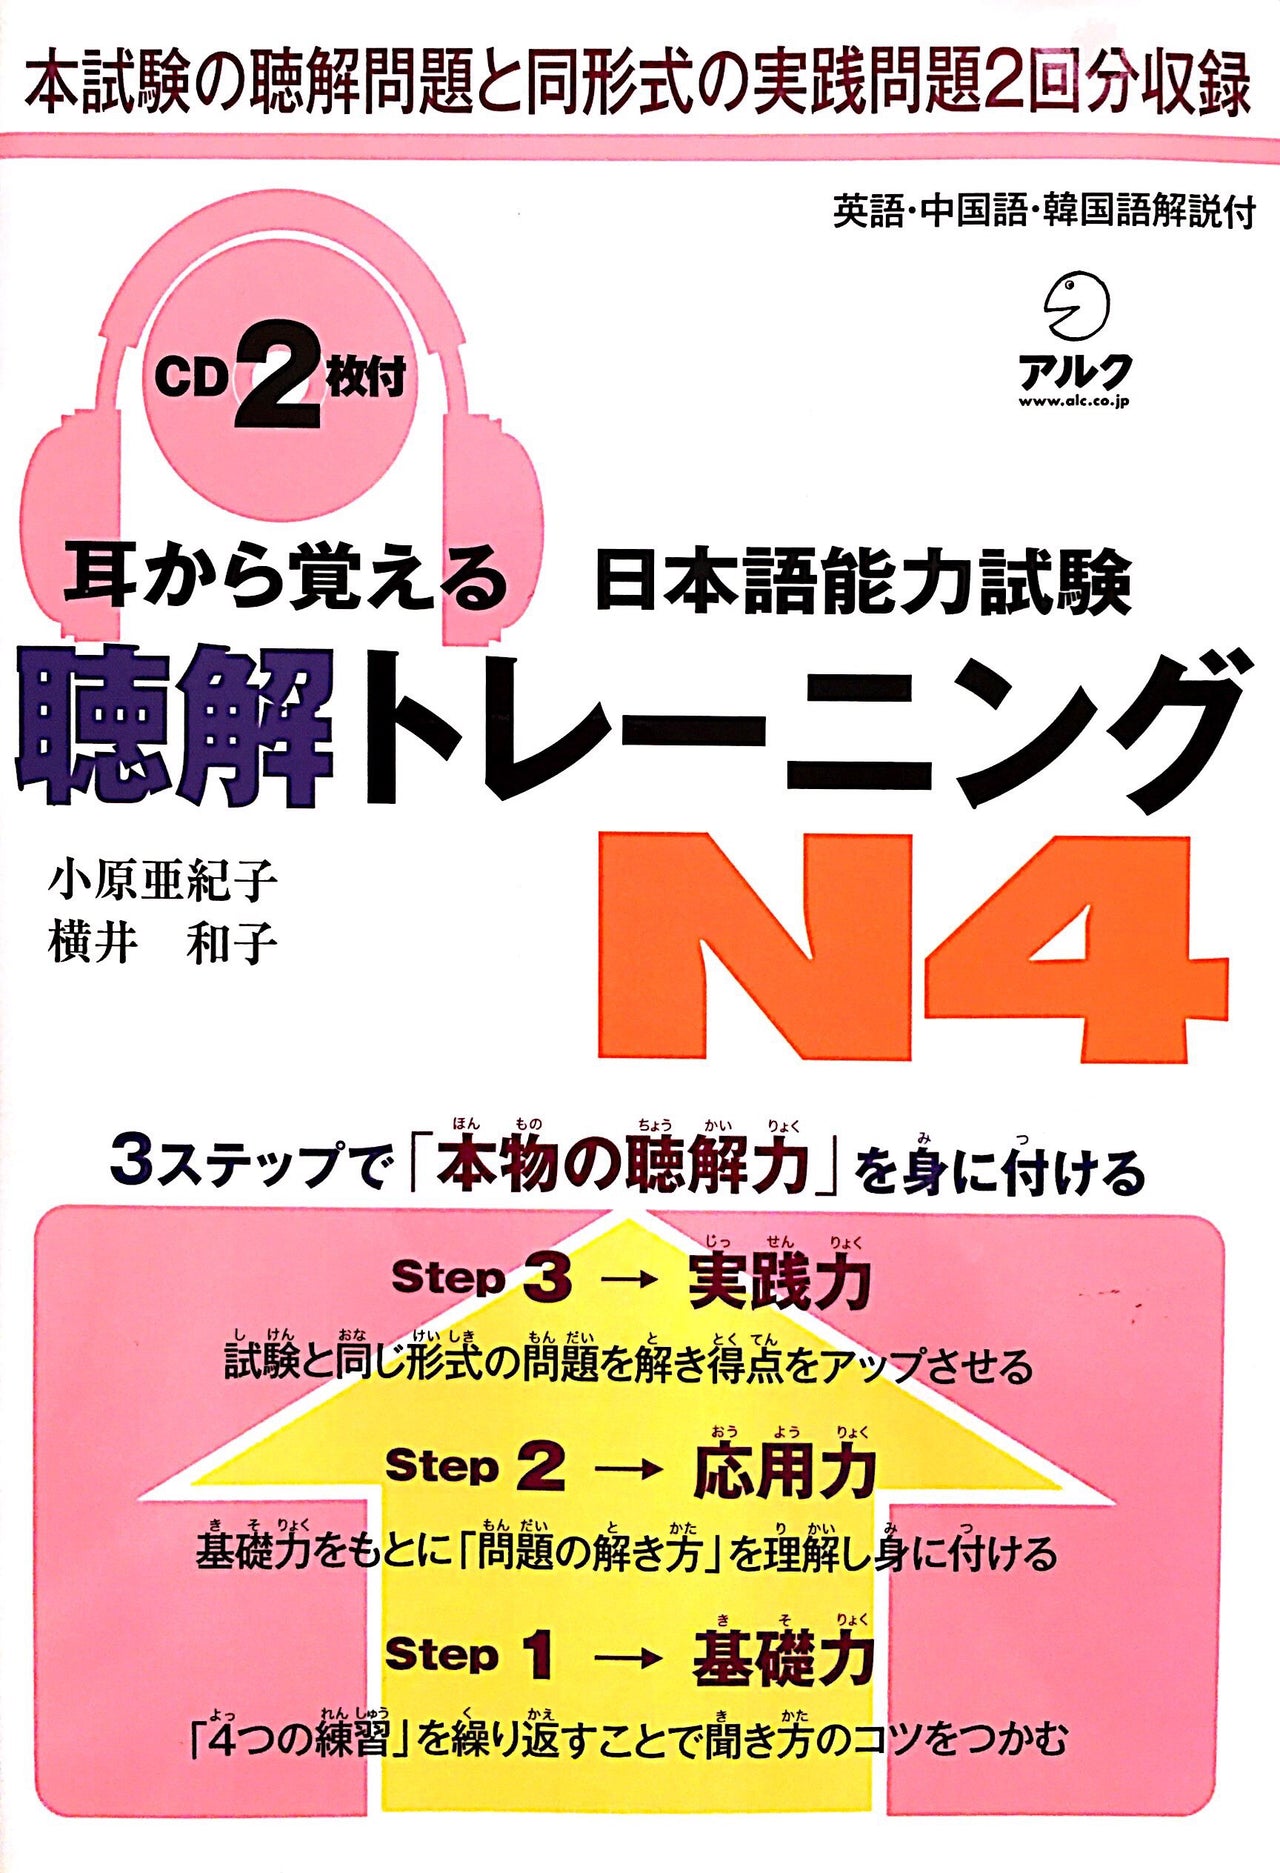 Mimi Kara Oboeru JLPT N4 Listening with 2 CDs - The Japan Shop